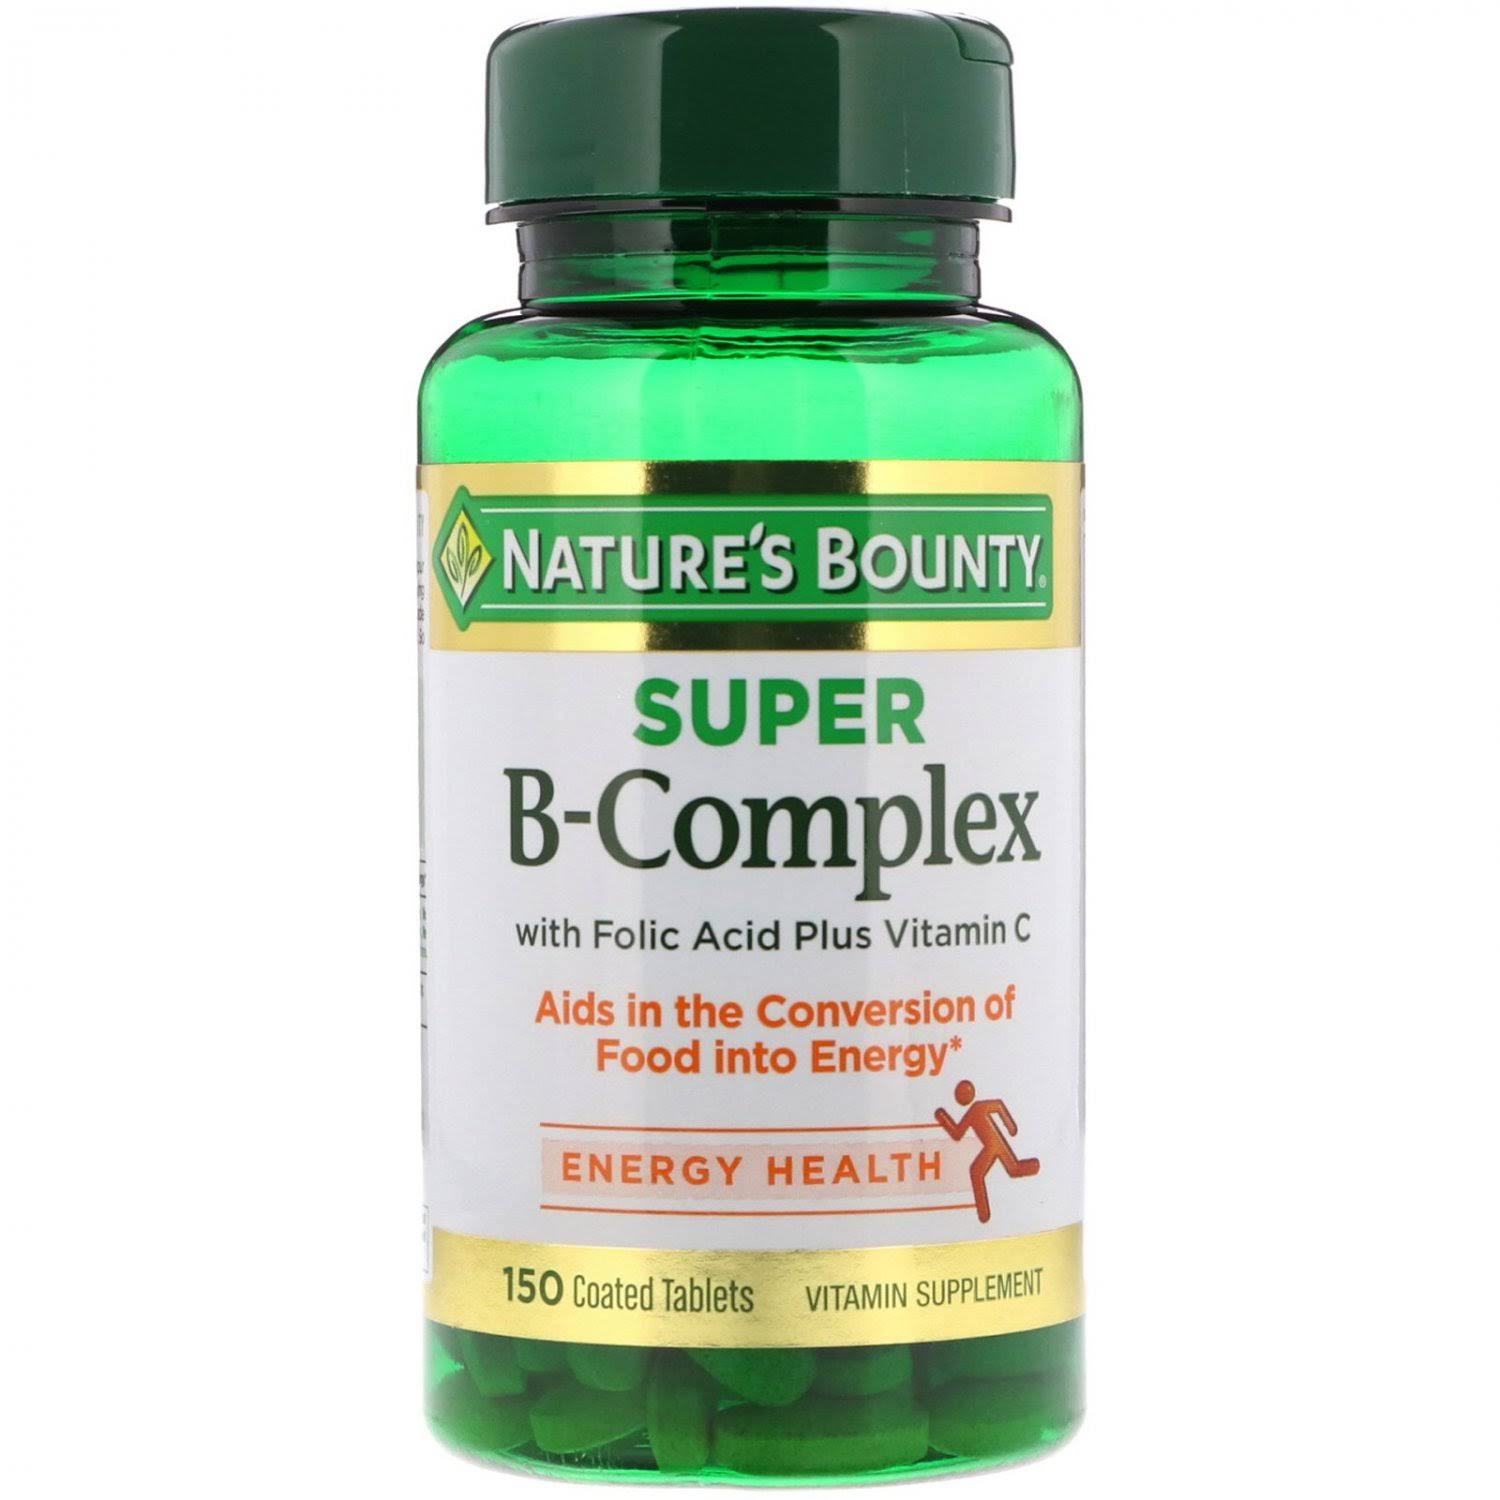 Nature's Bounty Super B-Complex With Folic Acid Plus Vitamin C - 150 Tablets